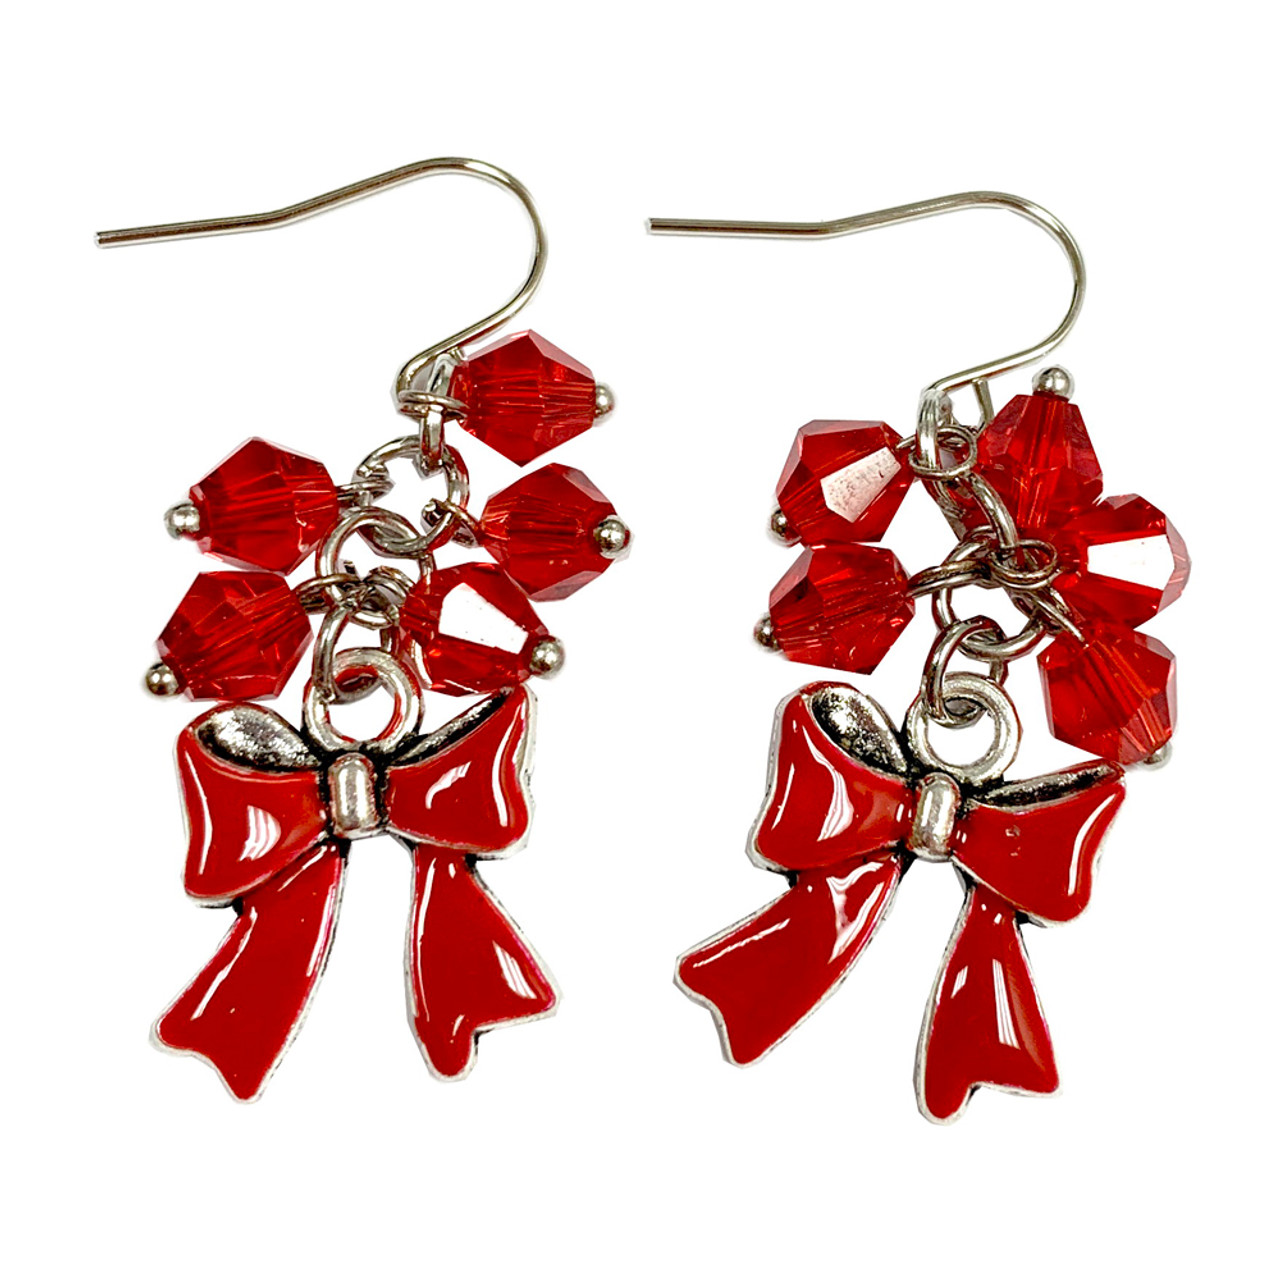 Red Ribbon Earrings - Christmas Earrings - Christmas Jewelry Gift - Christmas Dangle Earrings - E357d